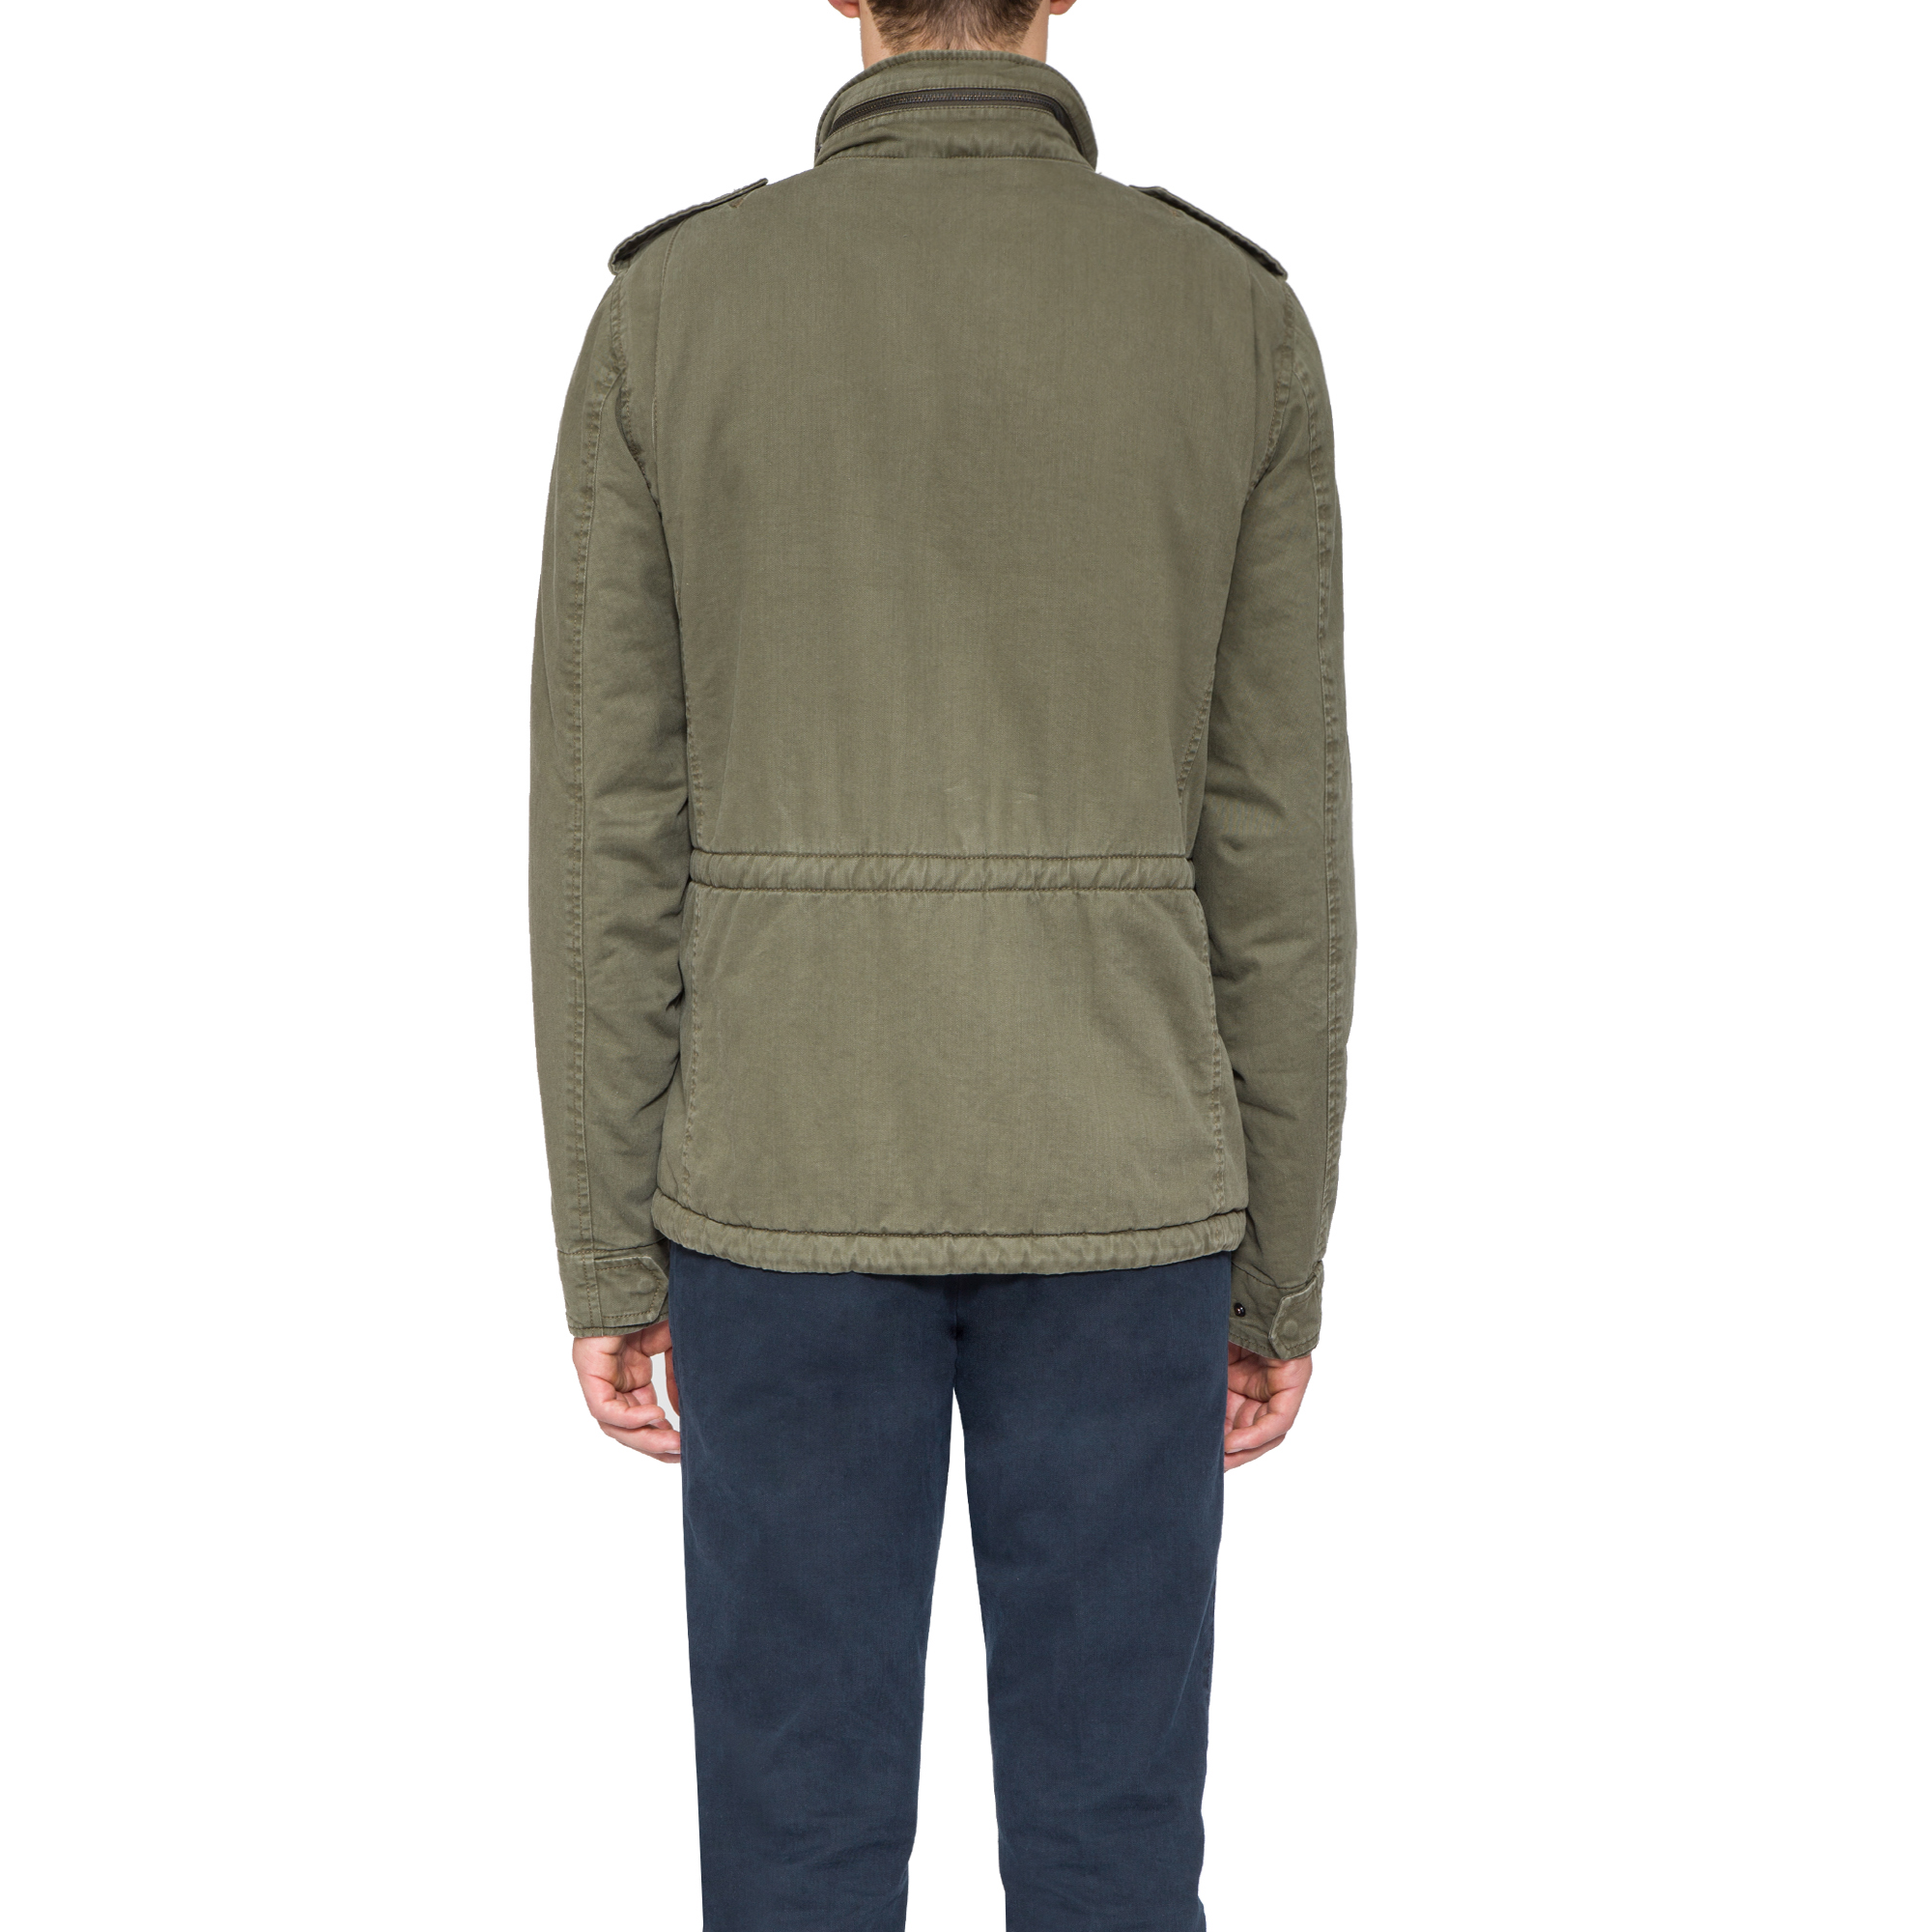 aspesi-military-green-minifield-winter-jacket-product-3-14589499-431300765.jpeg